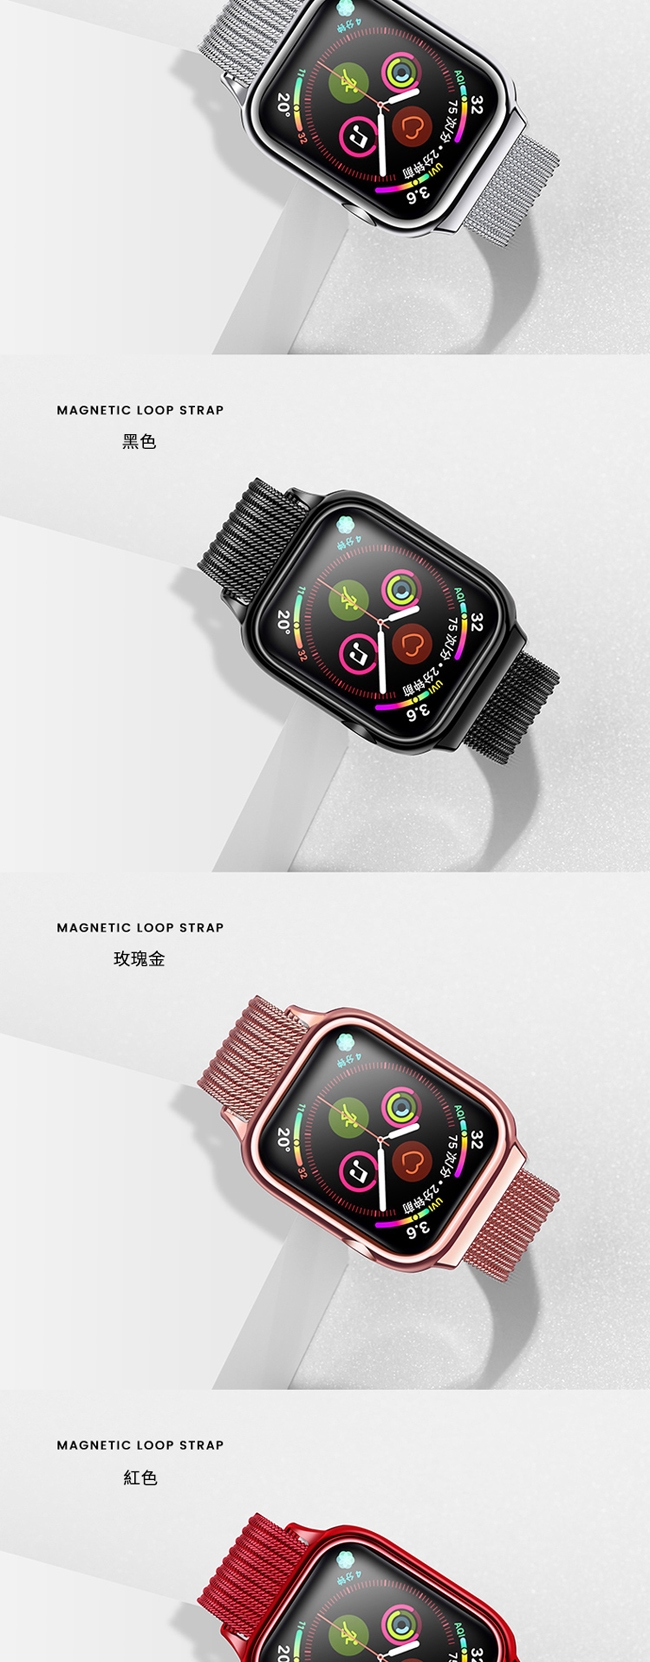 USAMS Apple Watch 5/4 米蘭尼斯磁吸金屬錶帶 送錶殼